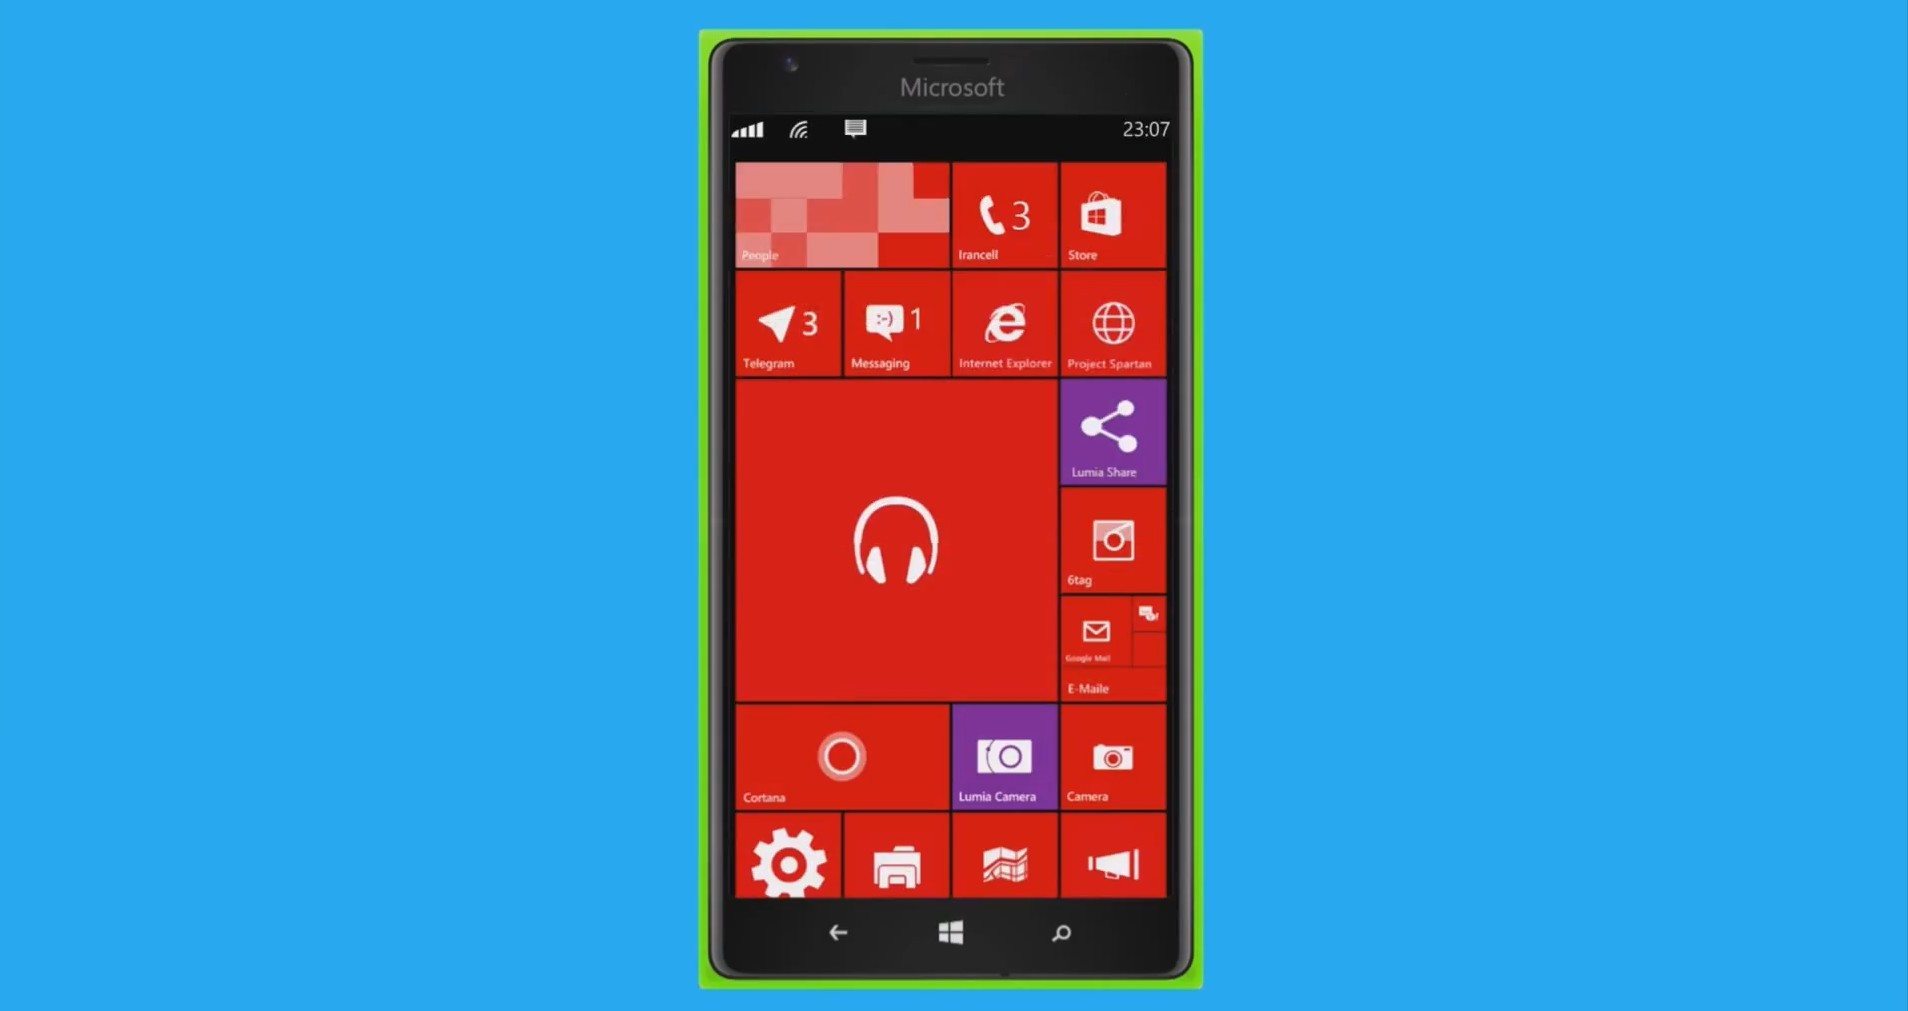 Windows-10-Mobile-Concept-Demos-Split-Screen-Support-Widgets-More-Video-480644-2